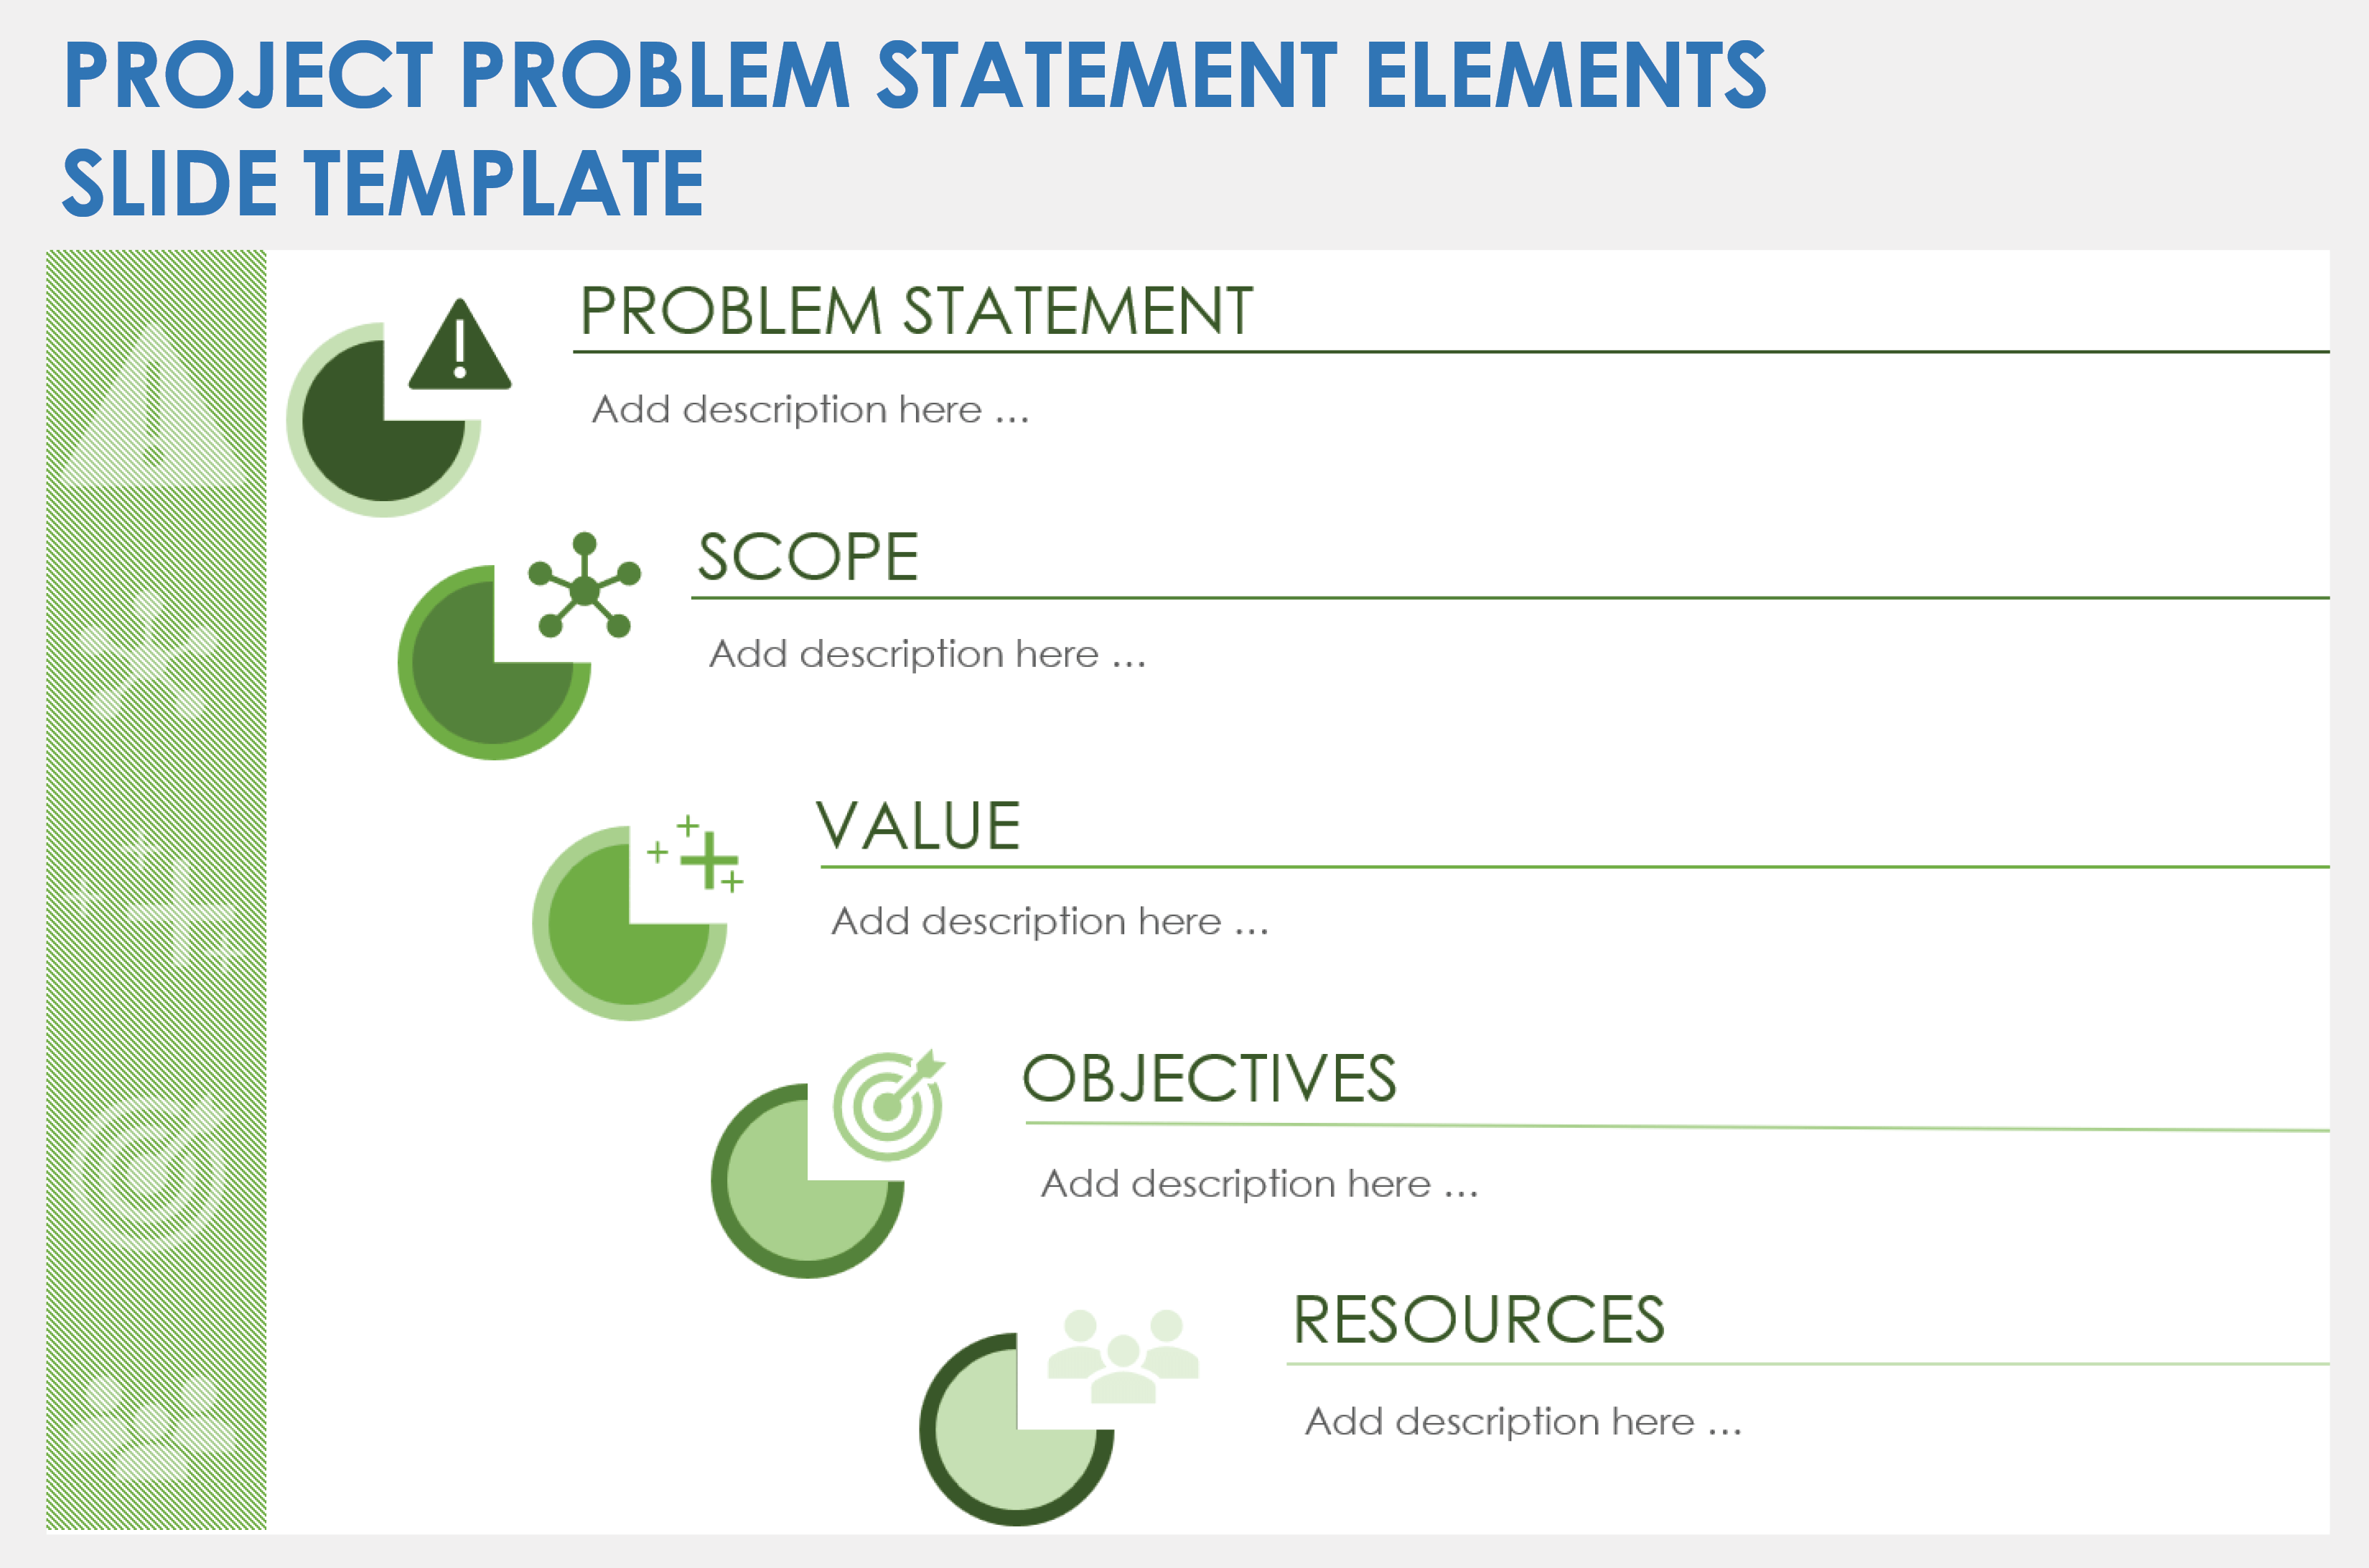 Project Problem Statement Elements Slide Template